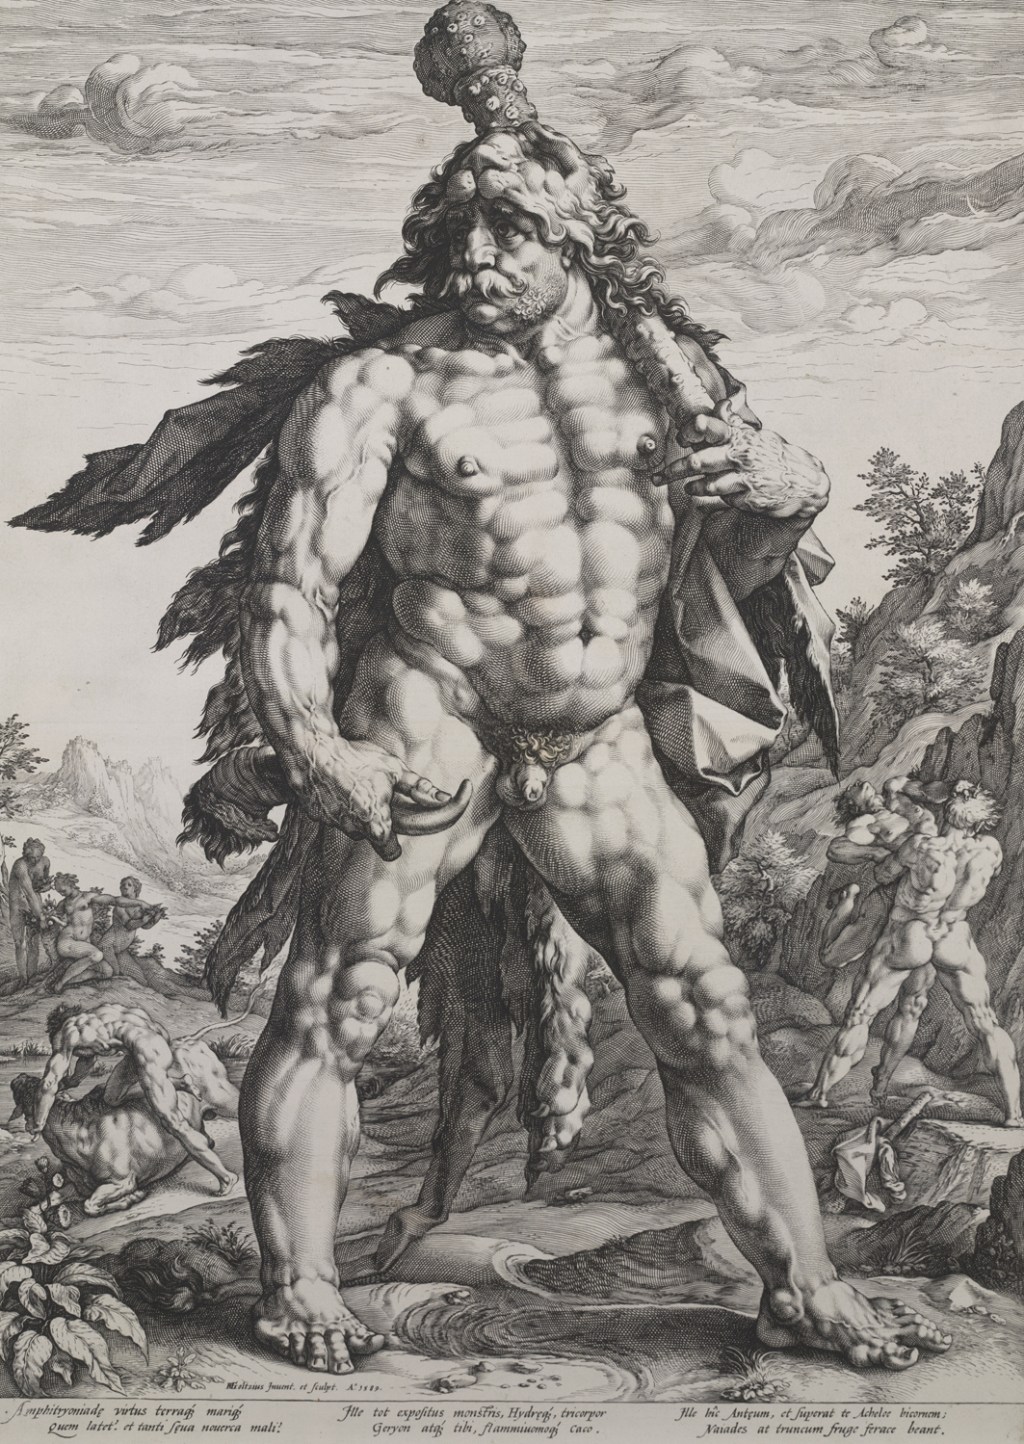 MÚSCULOS - O Grande Hércules, de Hendrick Goltzius: a nudez era influenciada pelo ideal de força divina greco-romano